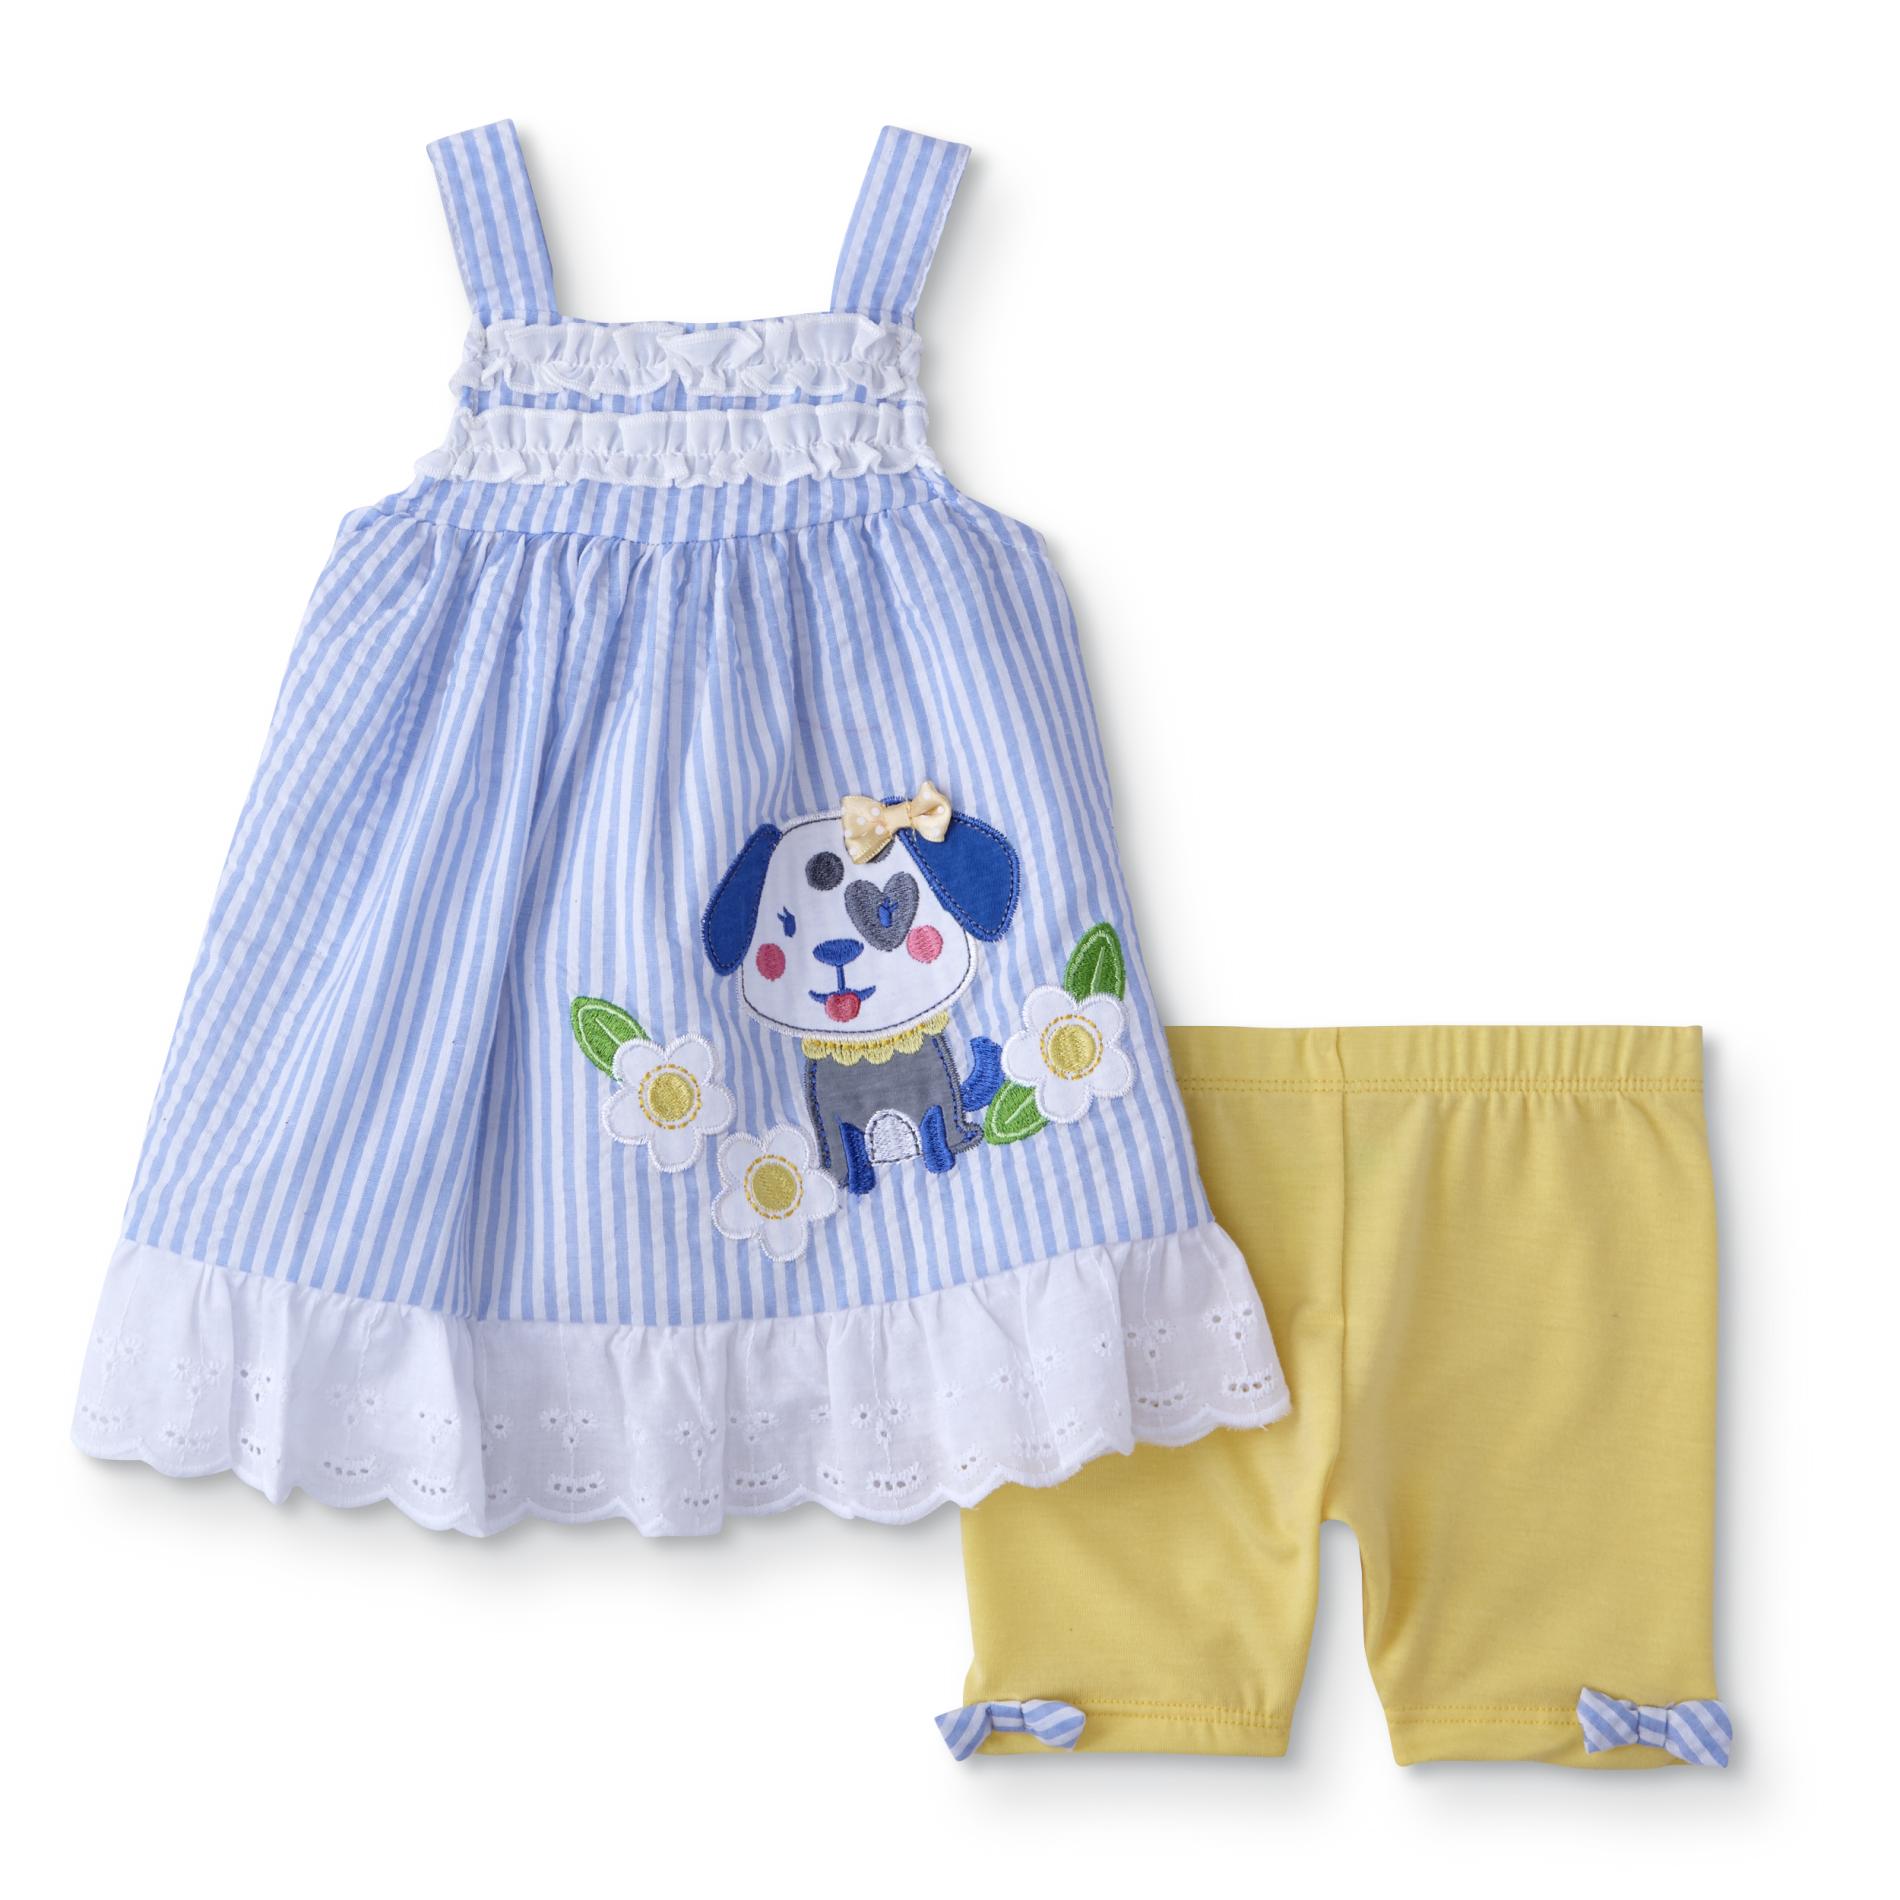 Infant Girls' Tunic & Shorts - Puppy/Striped